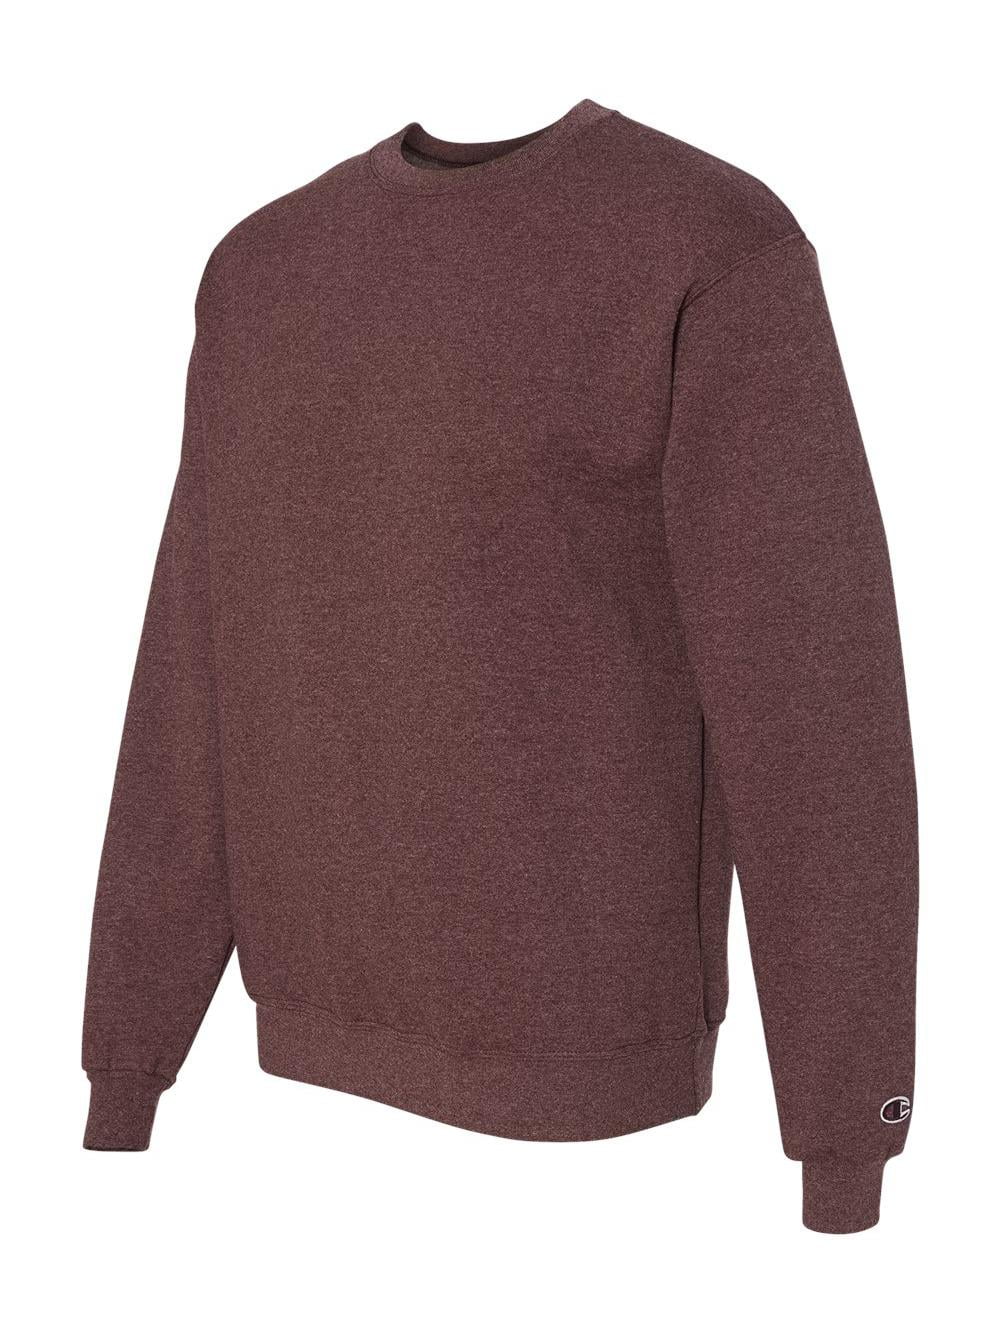 Rare! CHAMPION sweatshirt pullover jumper crew neck navy blue colour small size